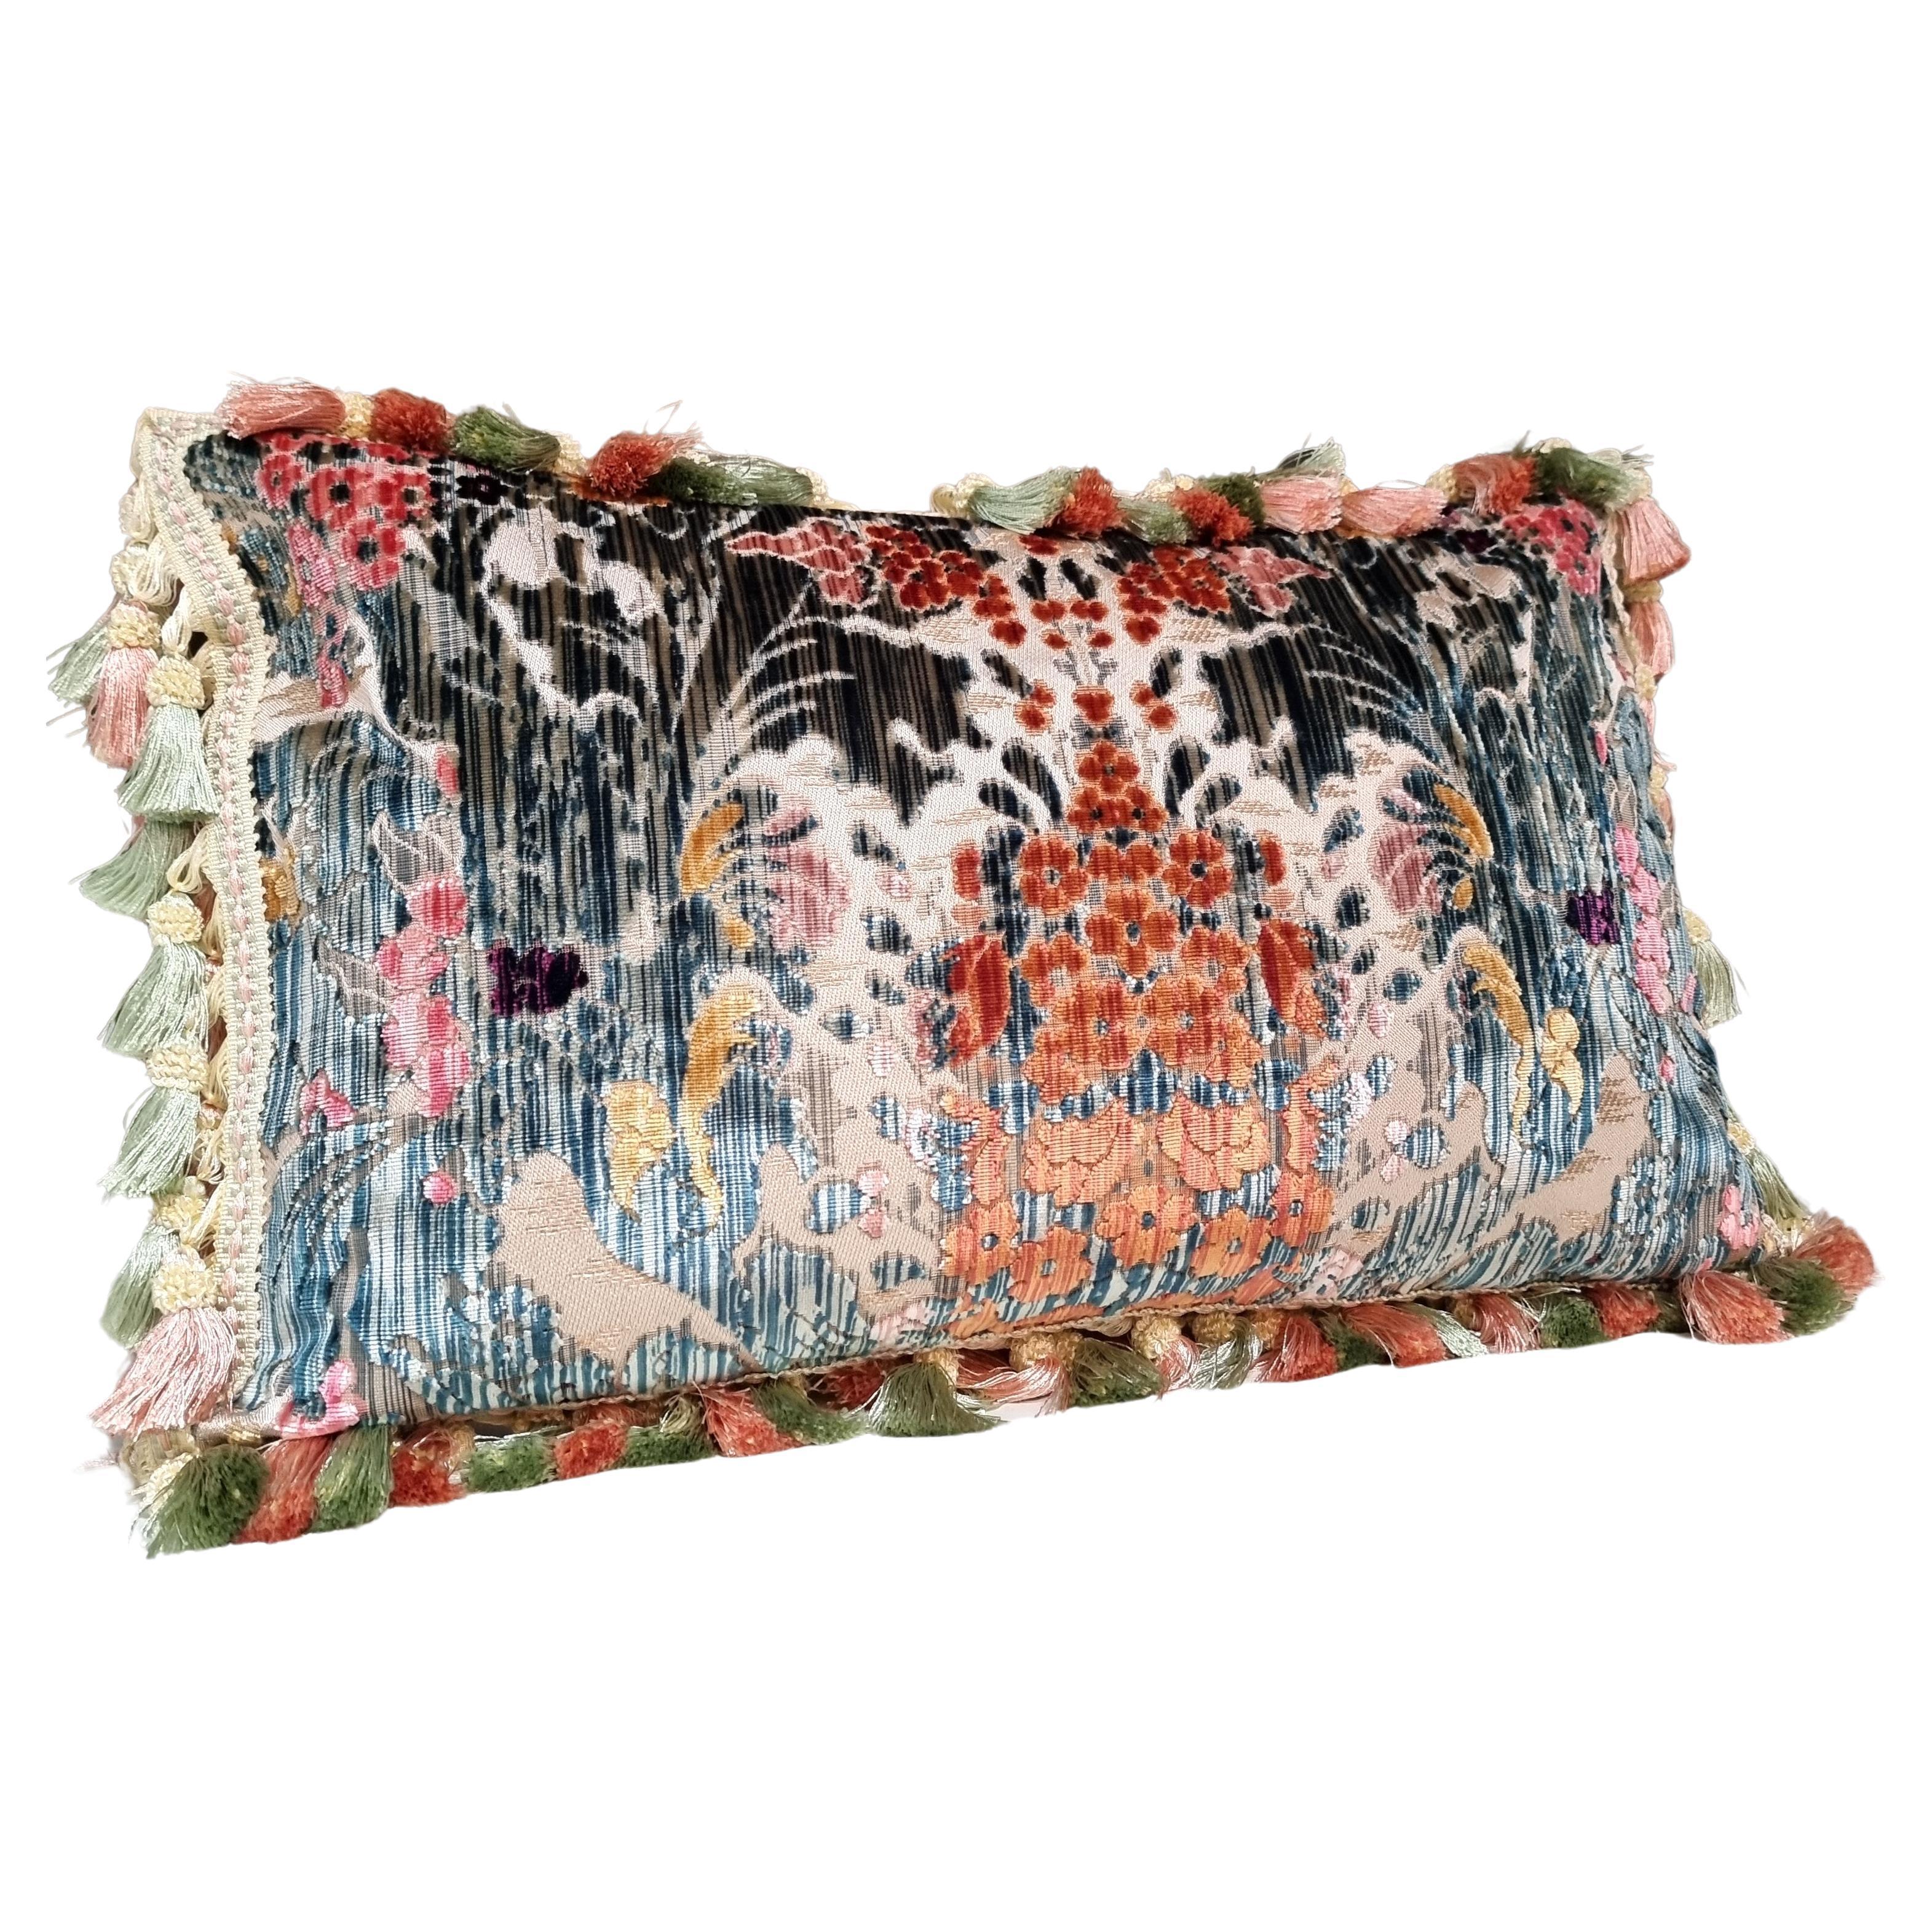 This amazing luxury pillow is handmade using the iconic silk multicolored velvet 